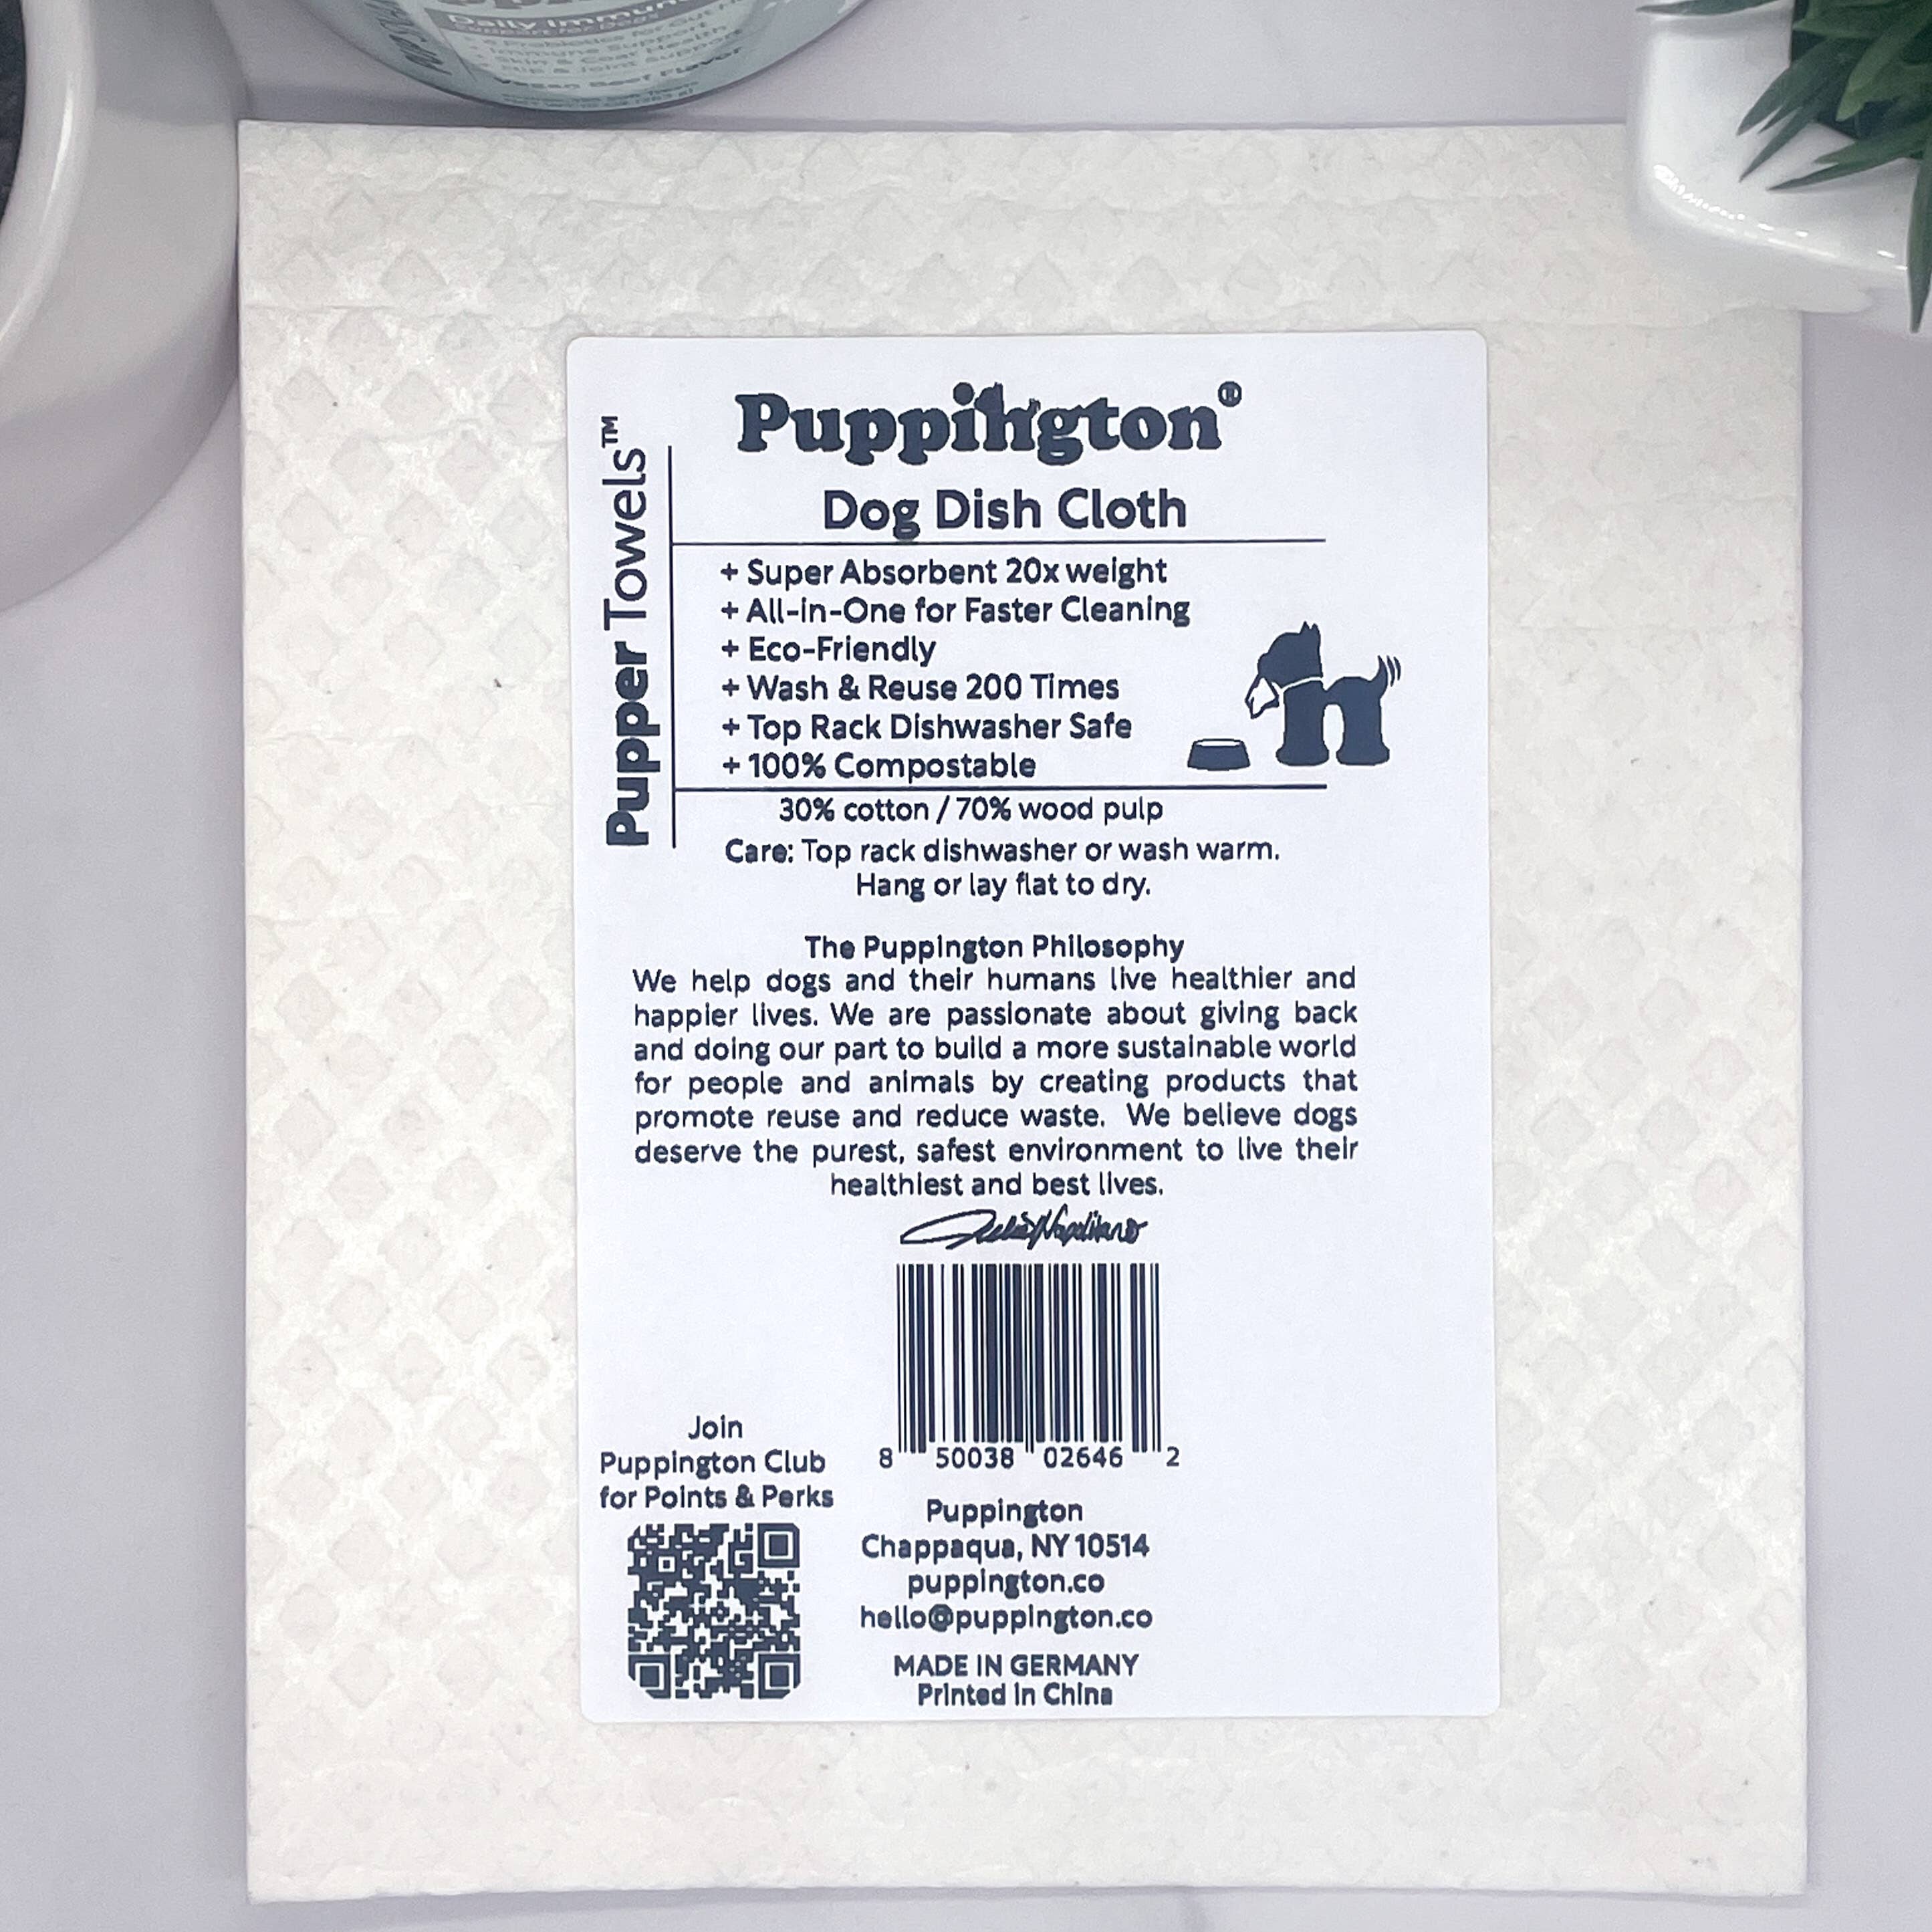 Puppington Pupper Towels Dog Swedish Dishcloths 12-Pack